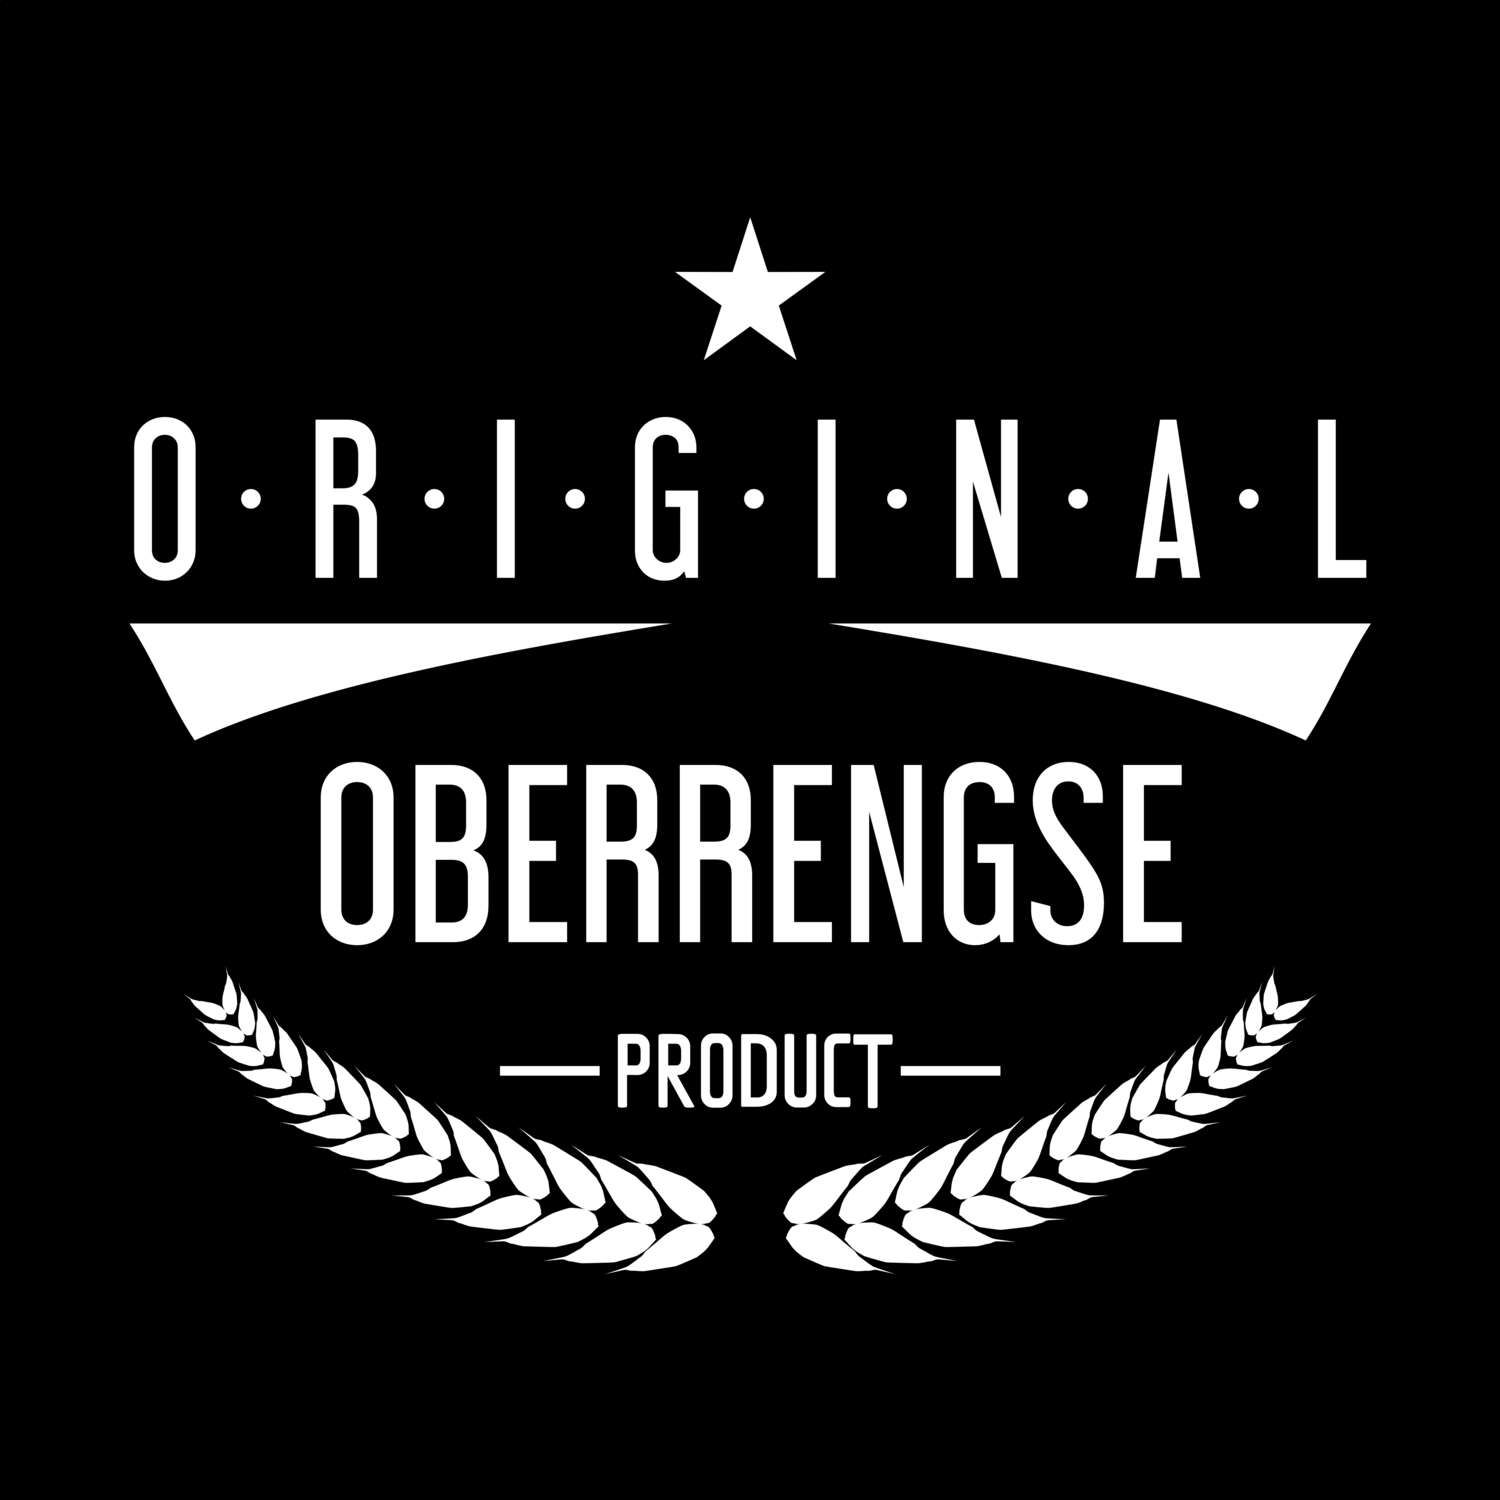 Oberrengse T-Shirt »Original Product«